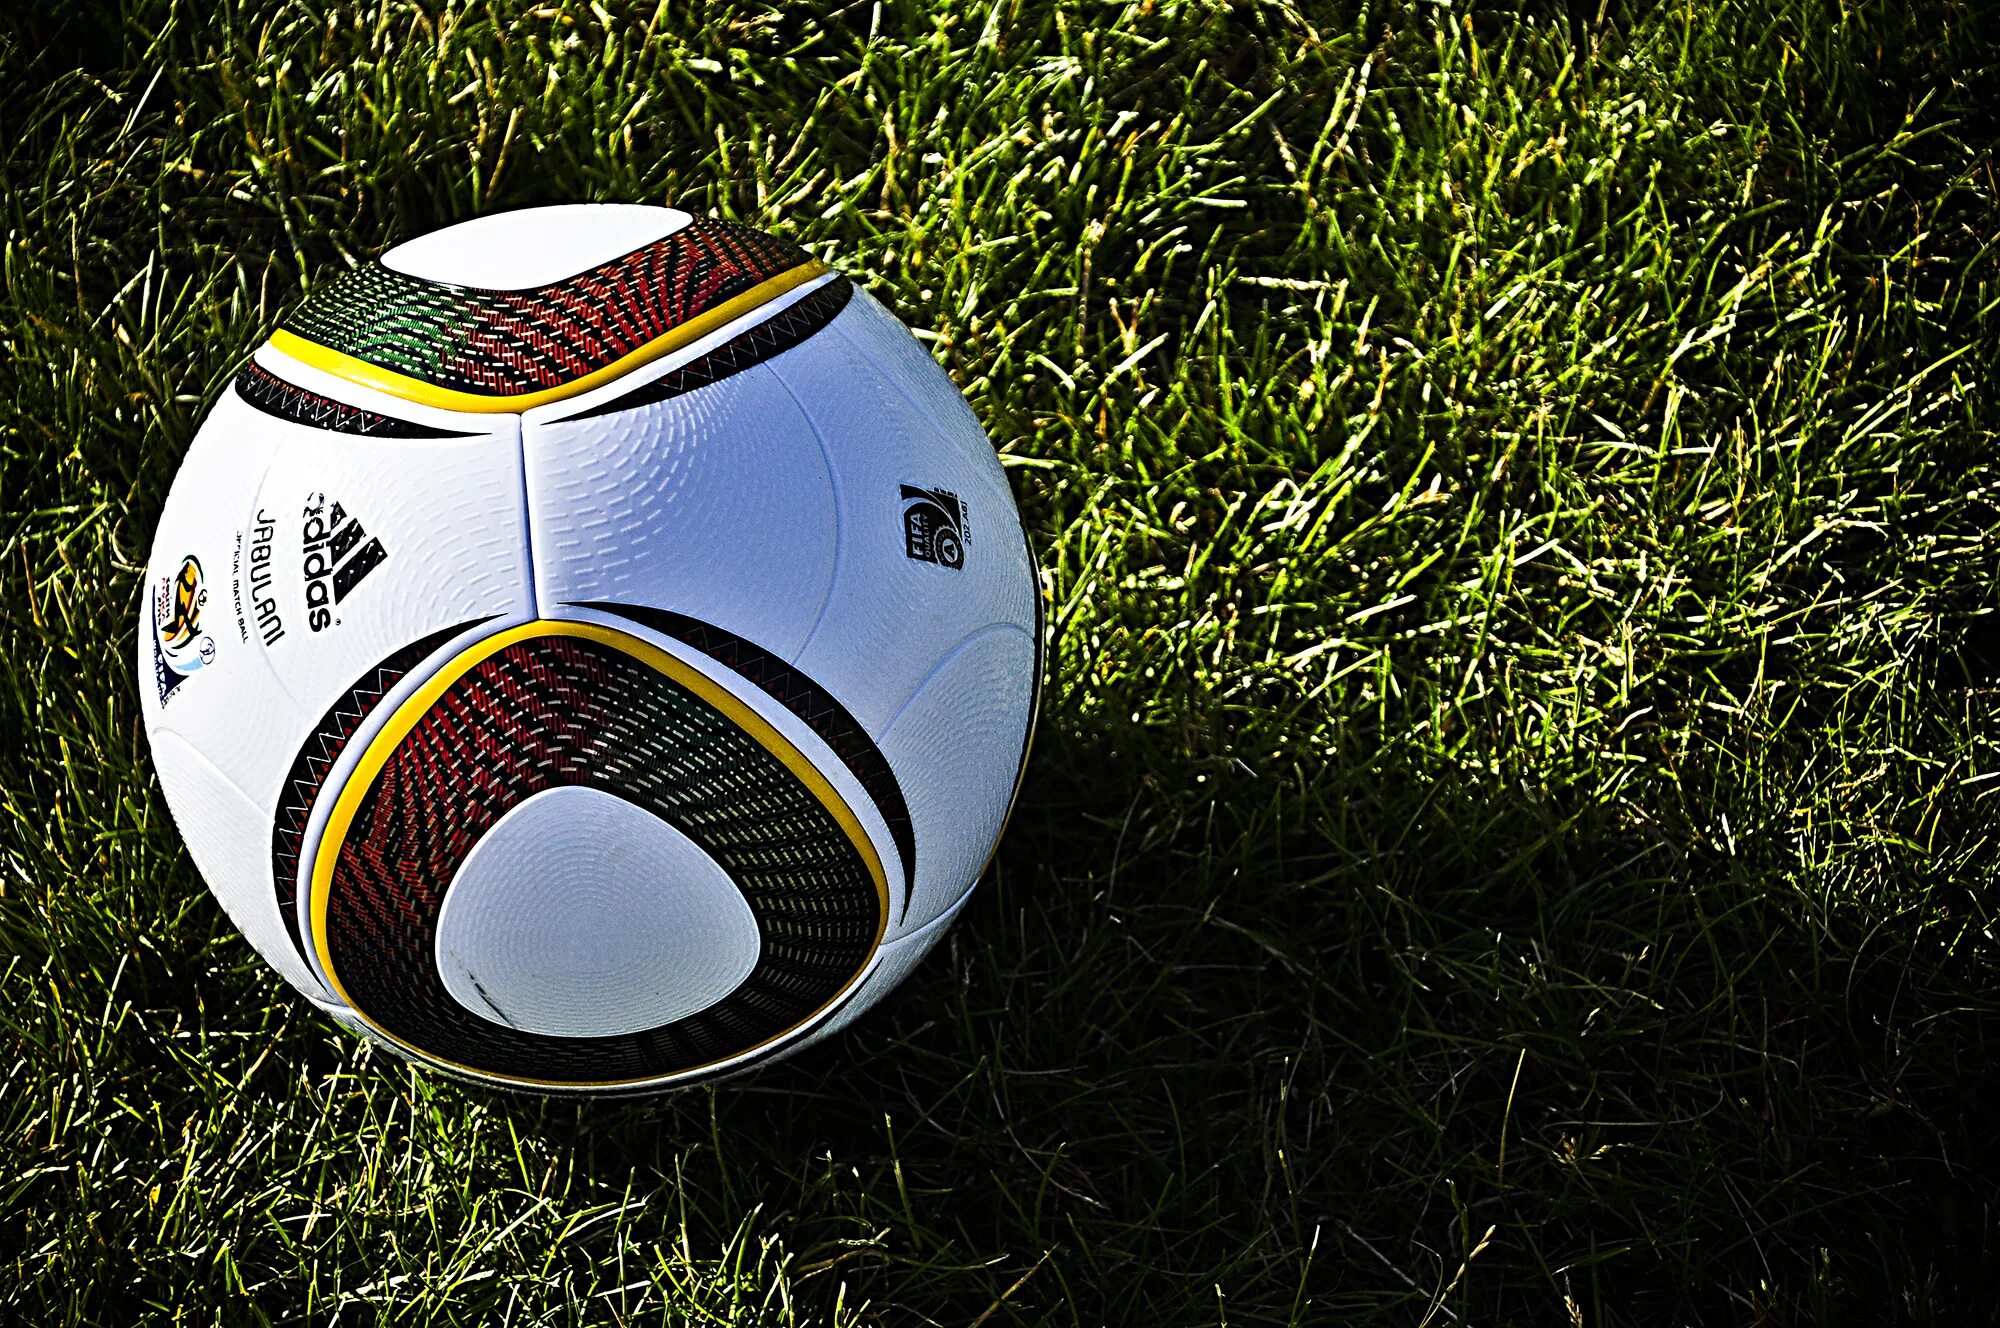 Мяч 6 футбол. Adidas Jabulani. Adidas Jabulani Ball. Футбольный мяч Jo’bulani фирмы adidas. Джабулани 2010.